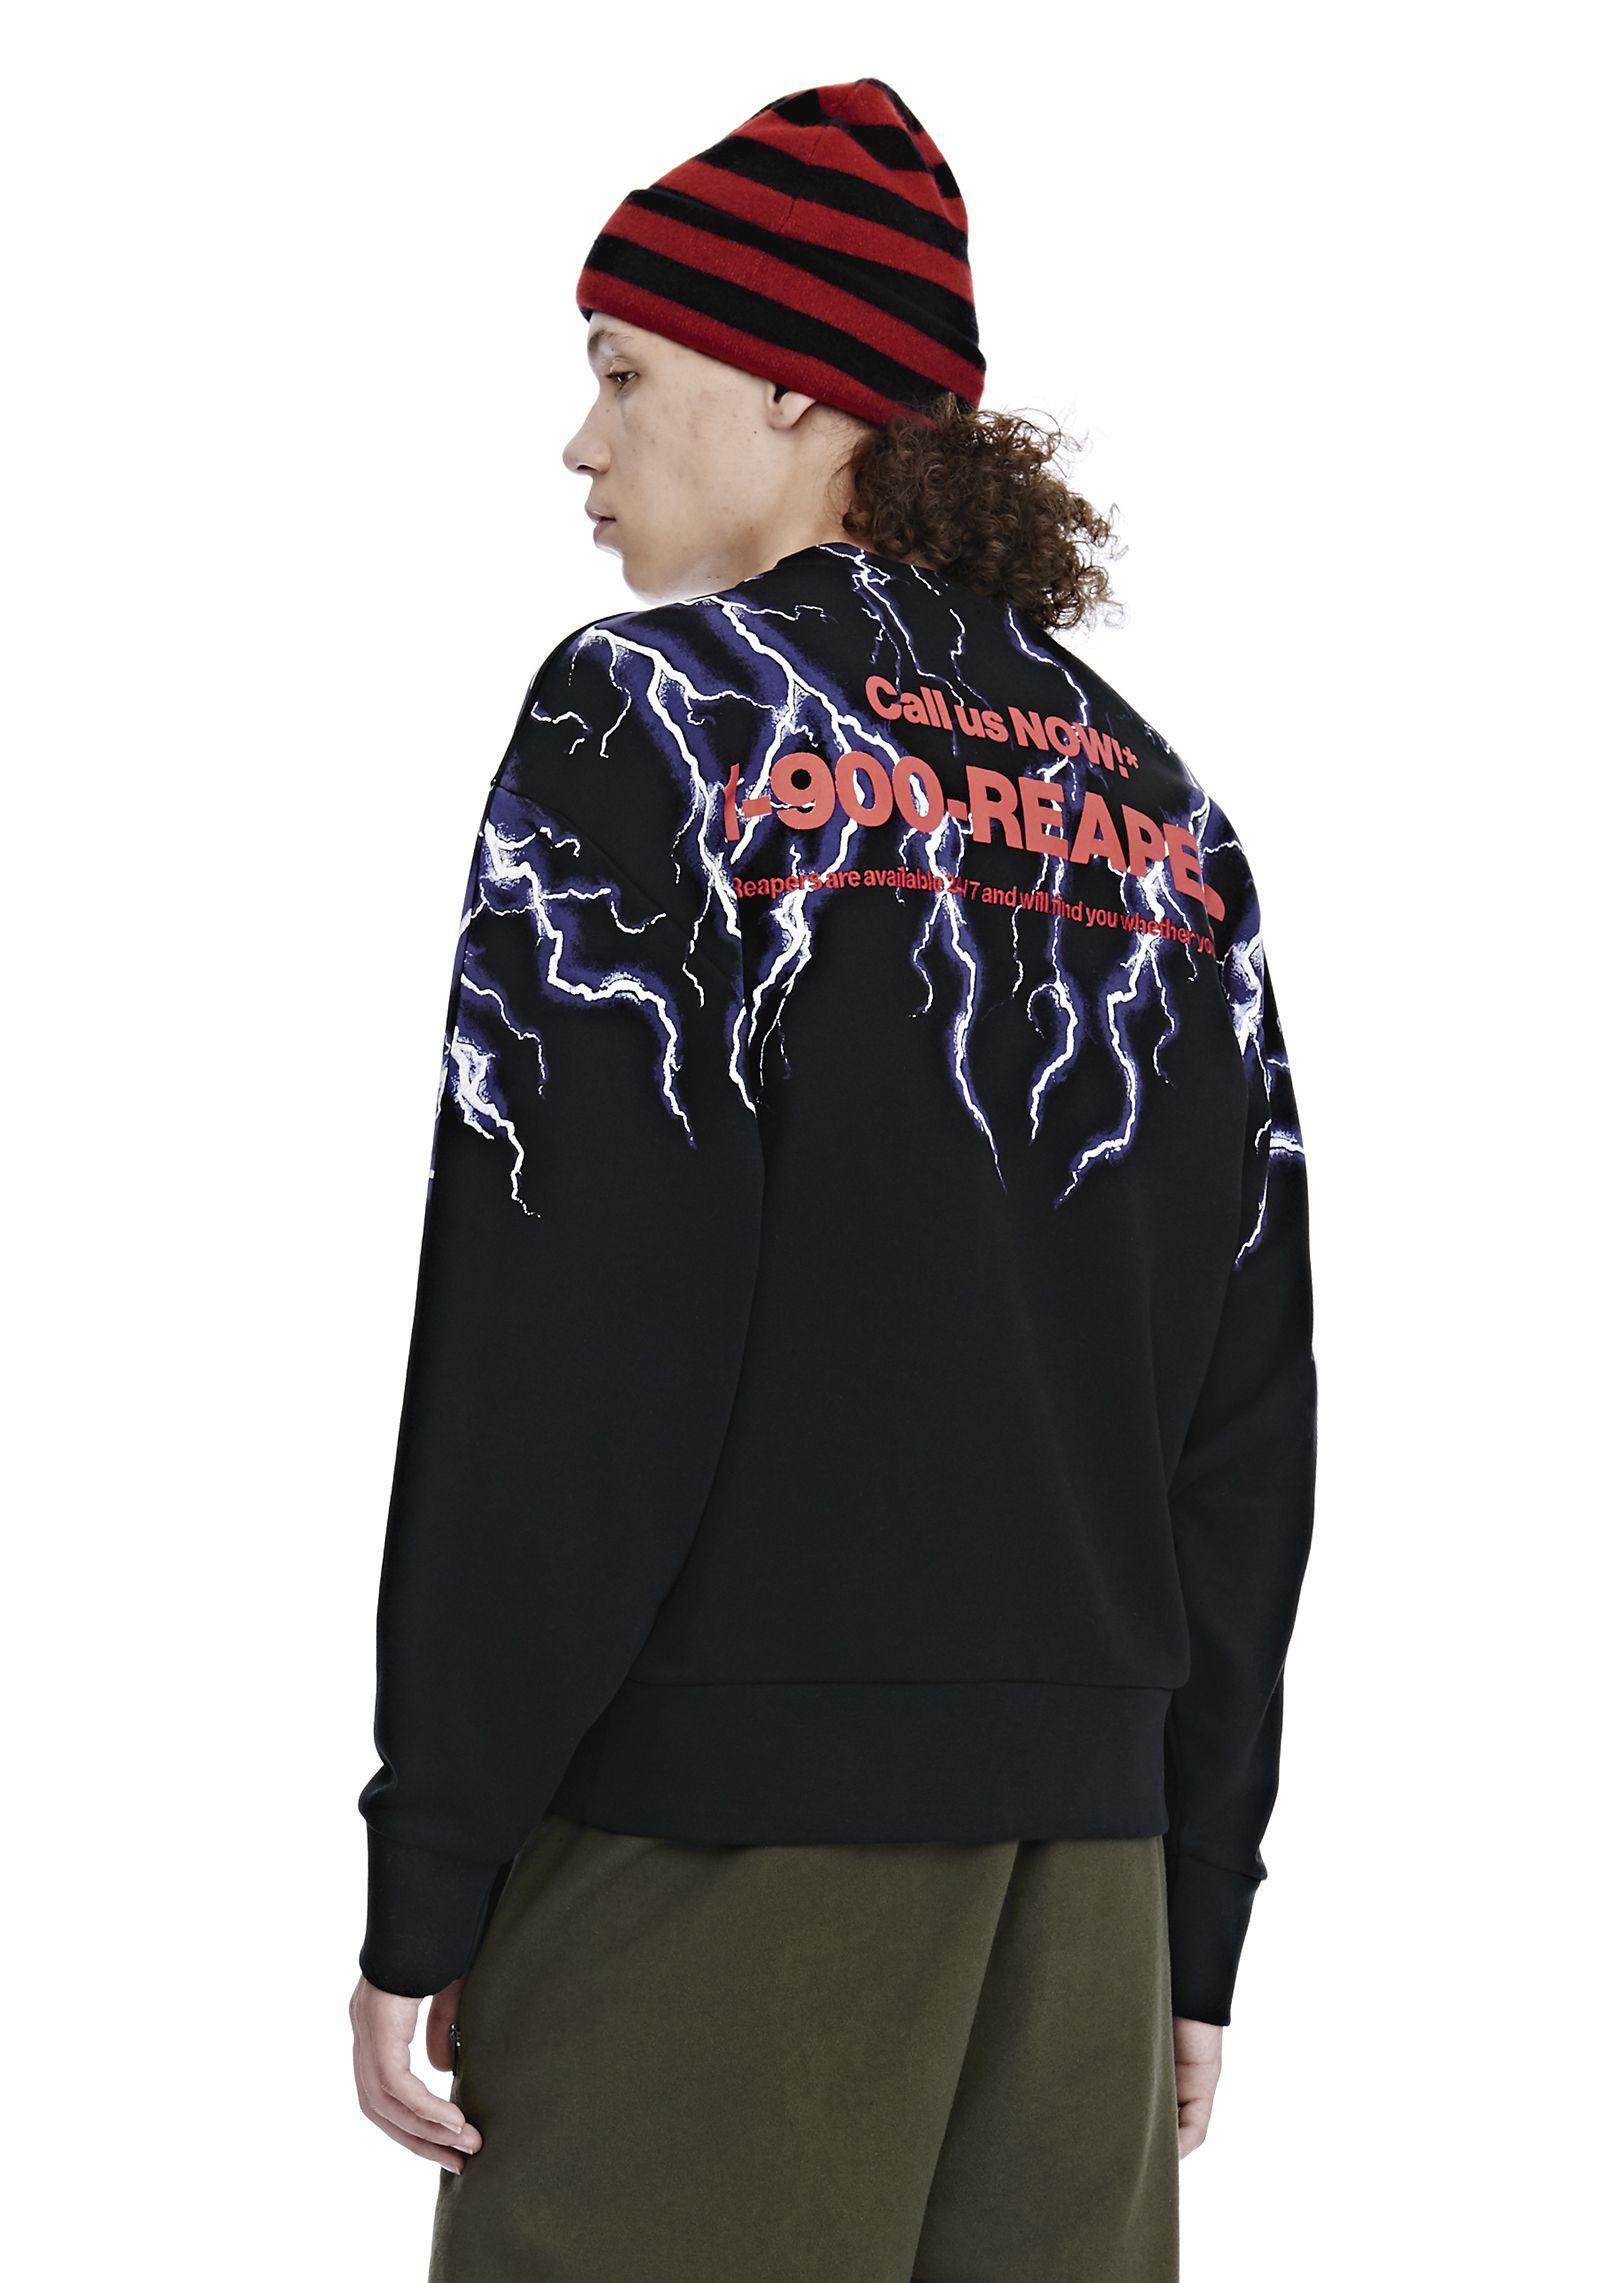 Alexander Wang Cotton Lightning Collage Sweatshirt in Black for Men - Lyst